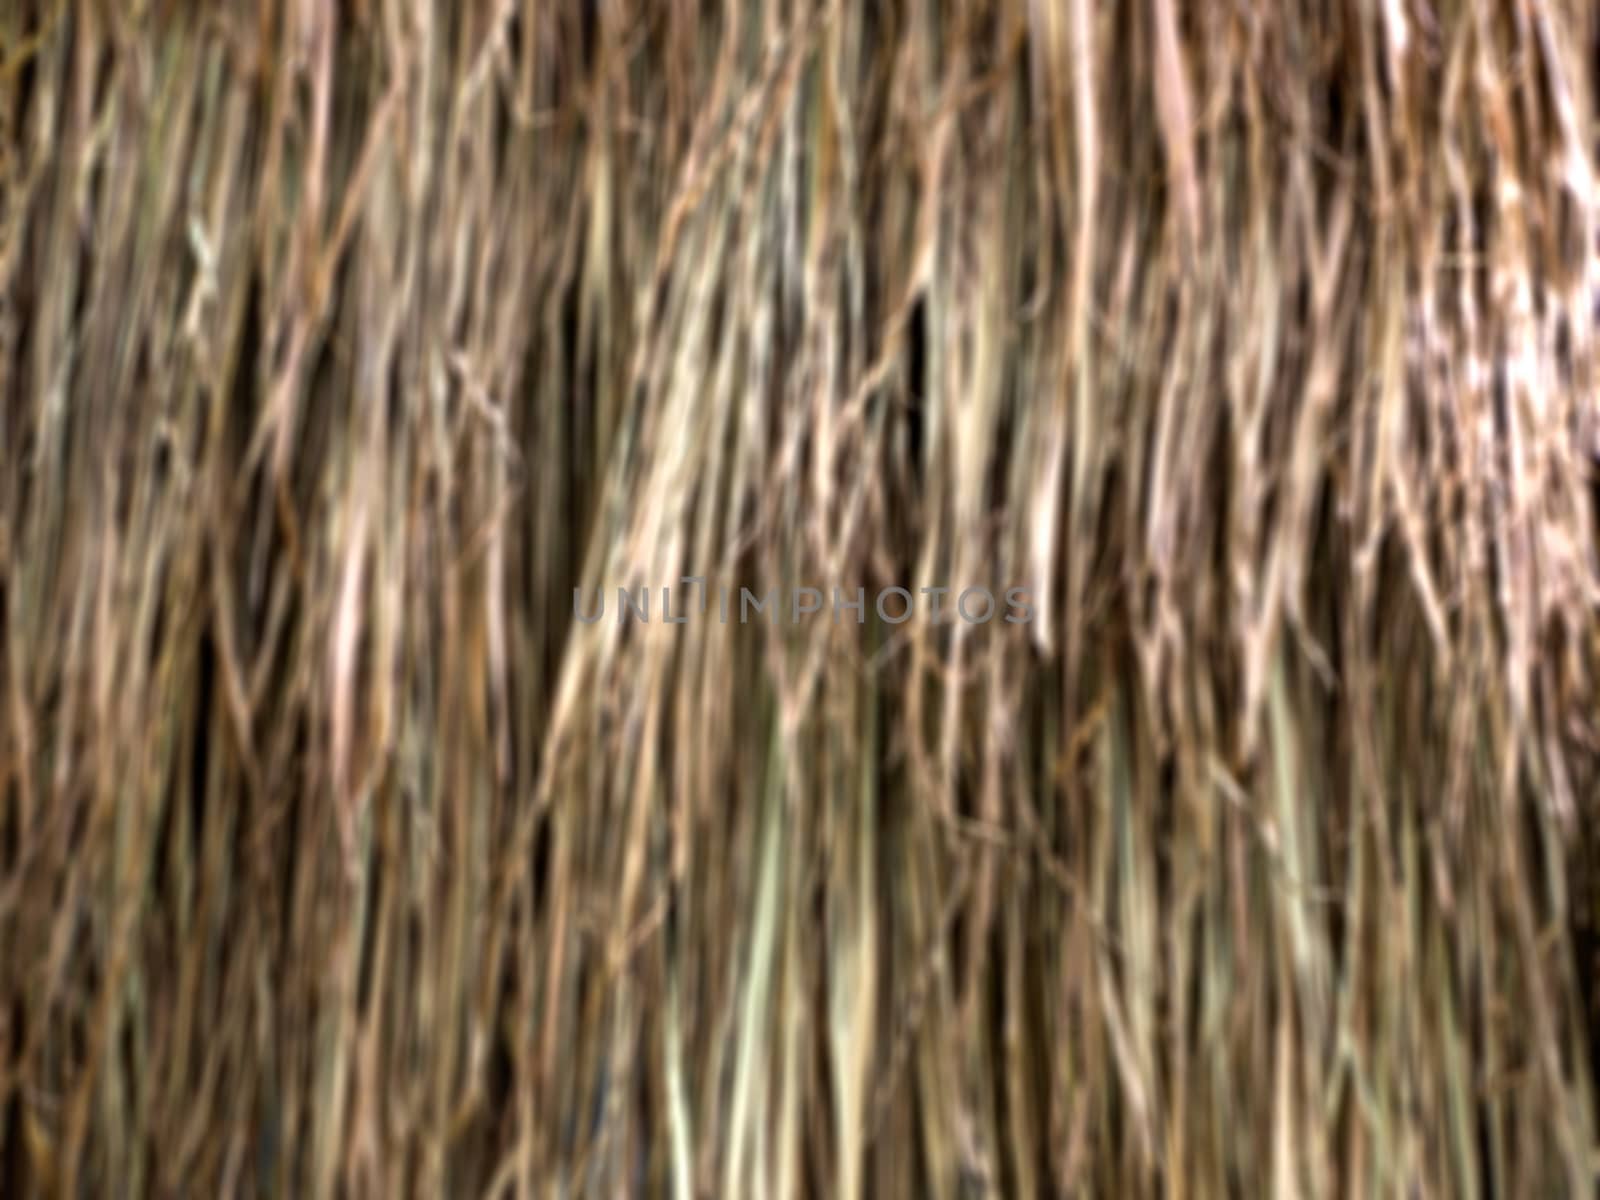 Dried Leaf blur focus Texture, haystack roof.